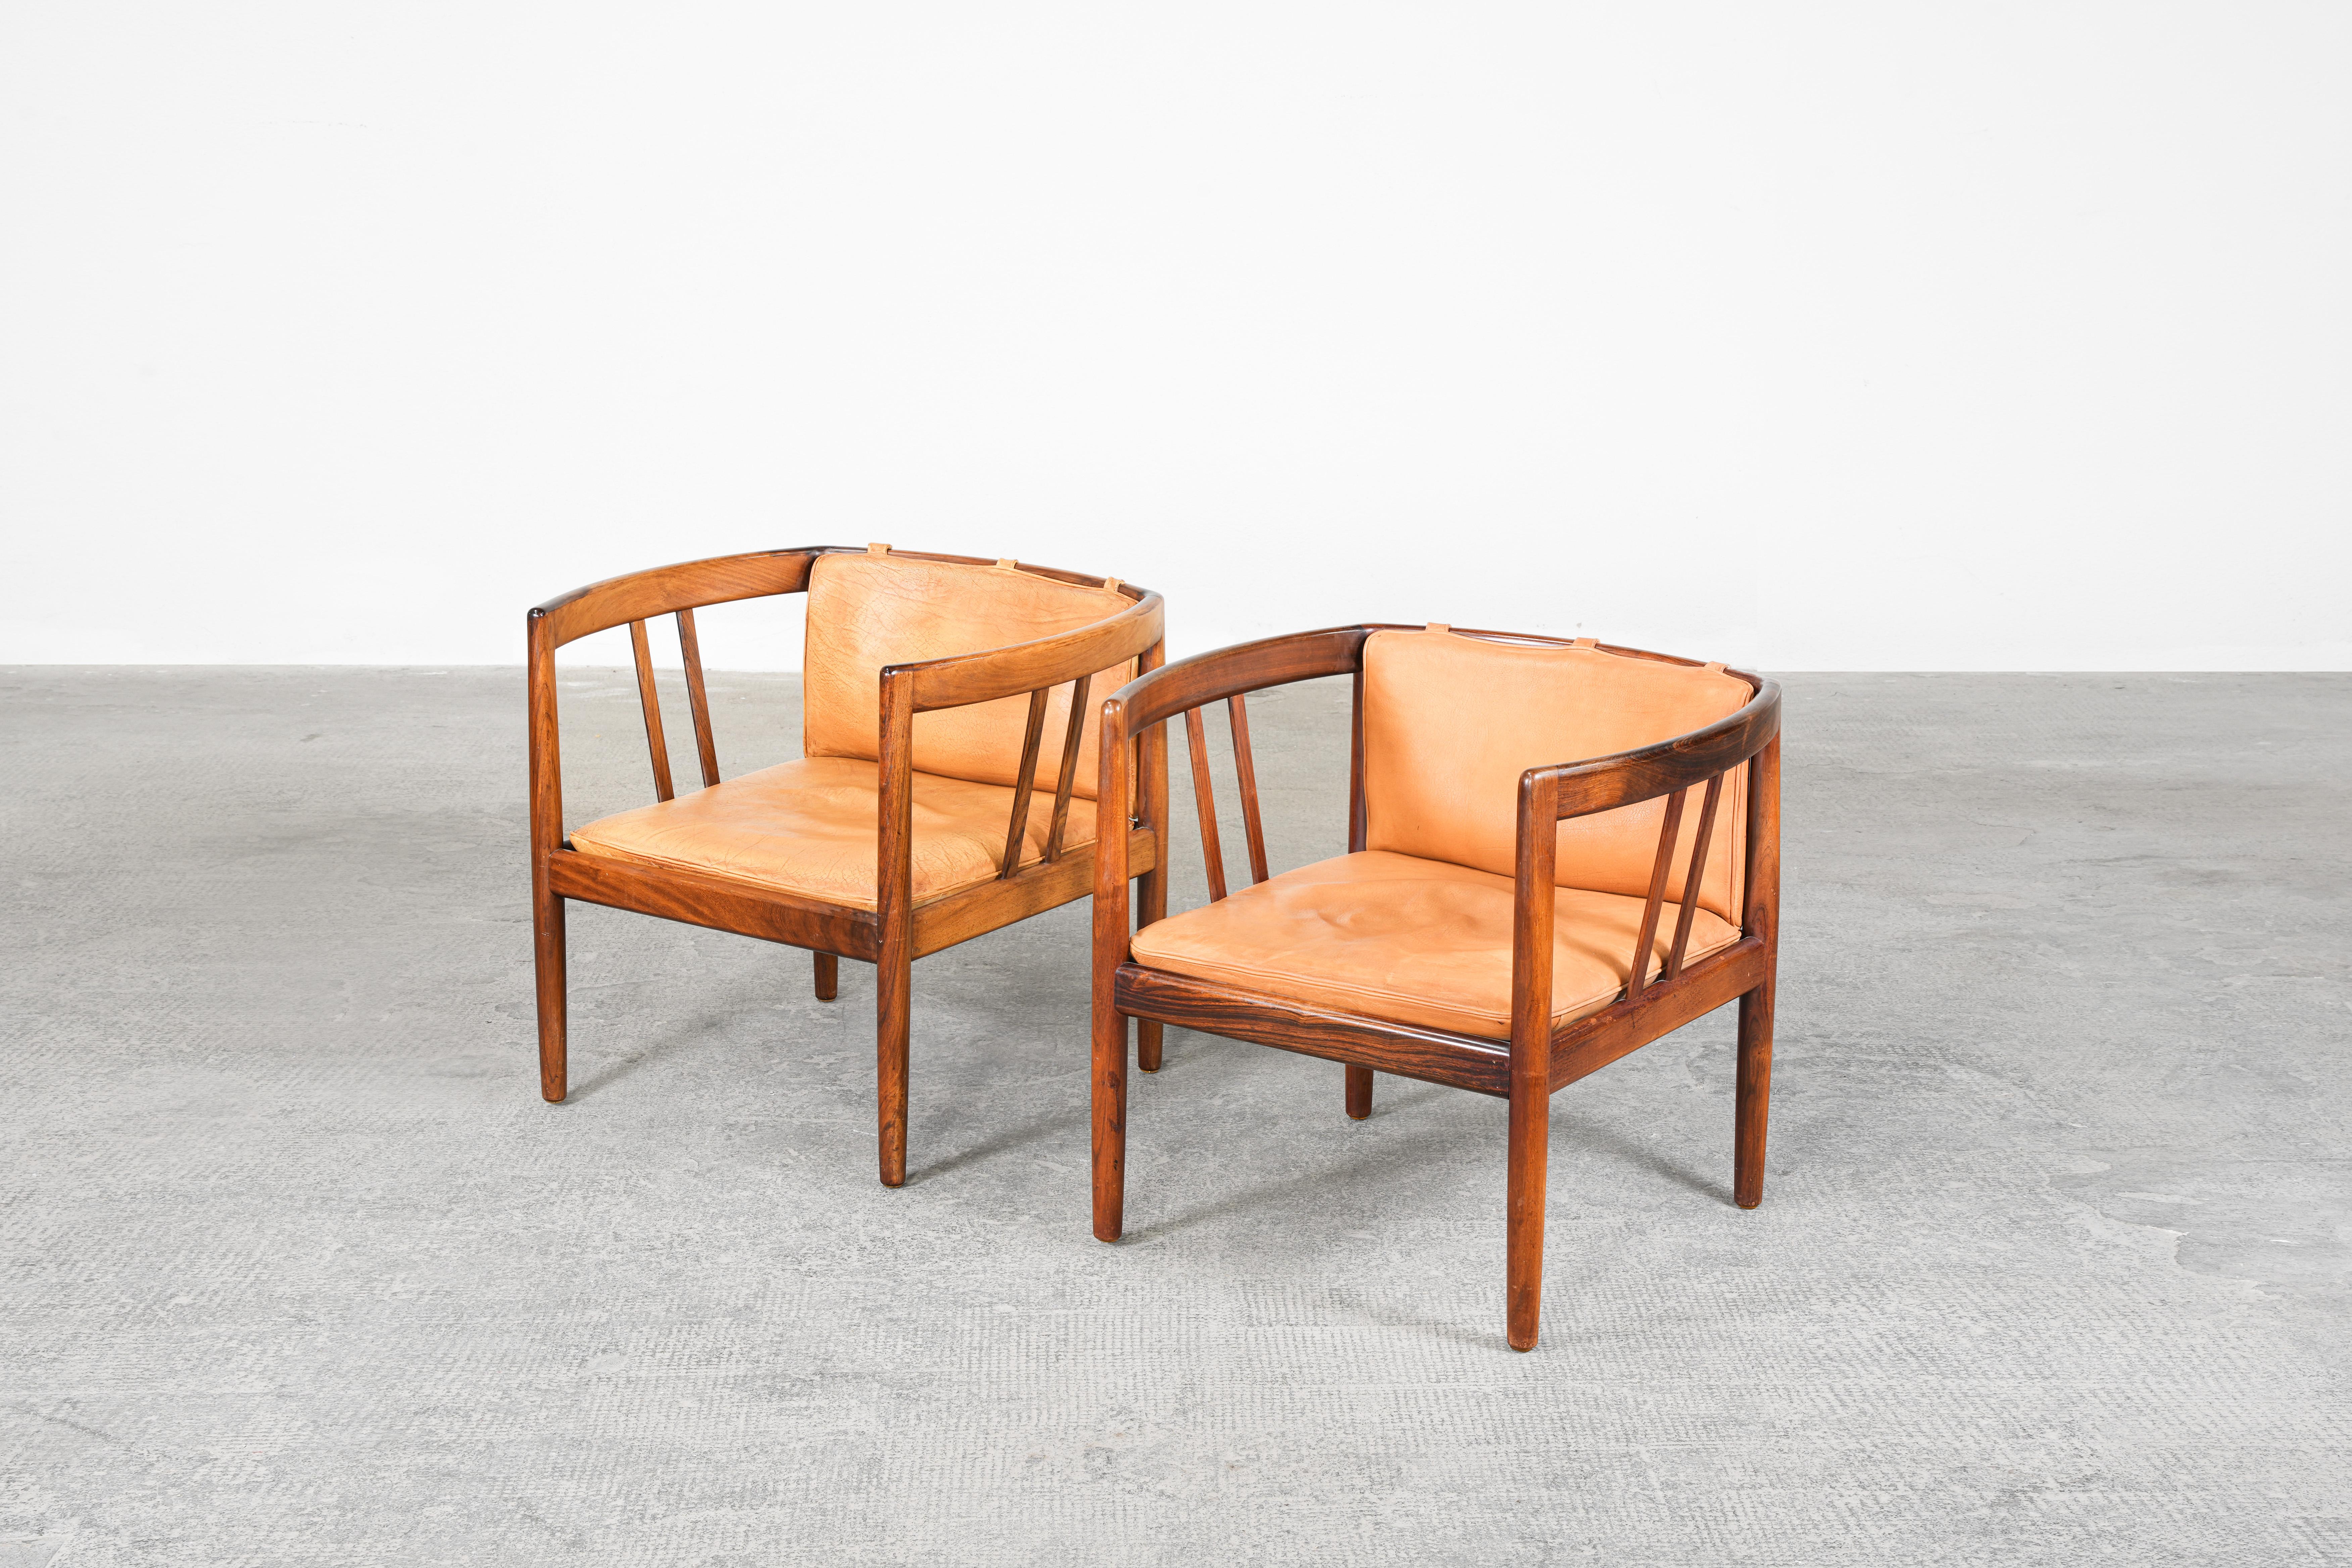 Pair of Danish Lounge Chairs by Illum Wikkelsø for Holger Christiansen, 1962 For Sale 7